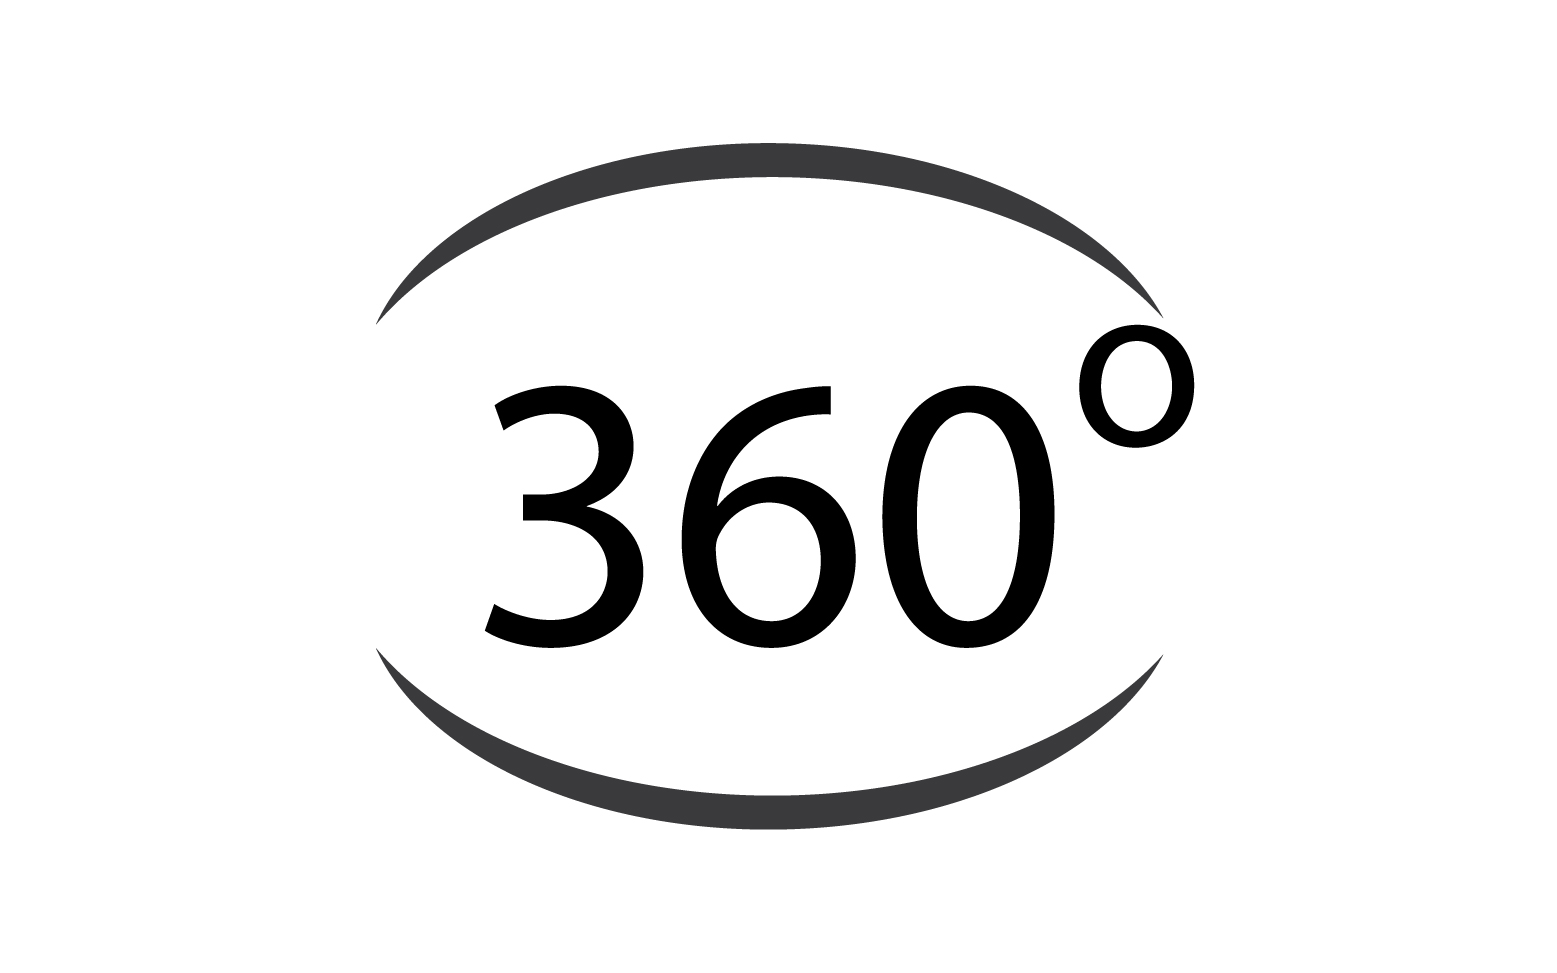 360 degree angle rotation icon symbol logo version v48